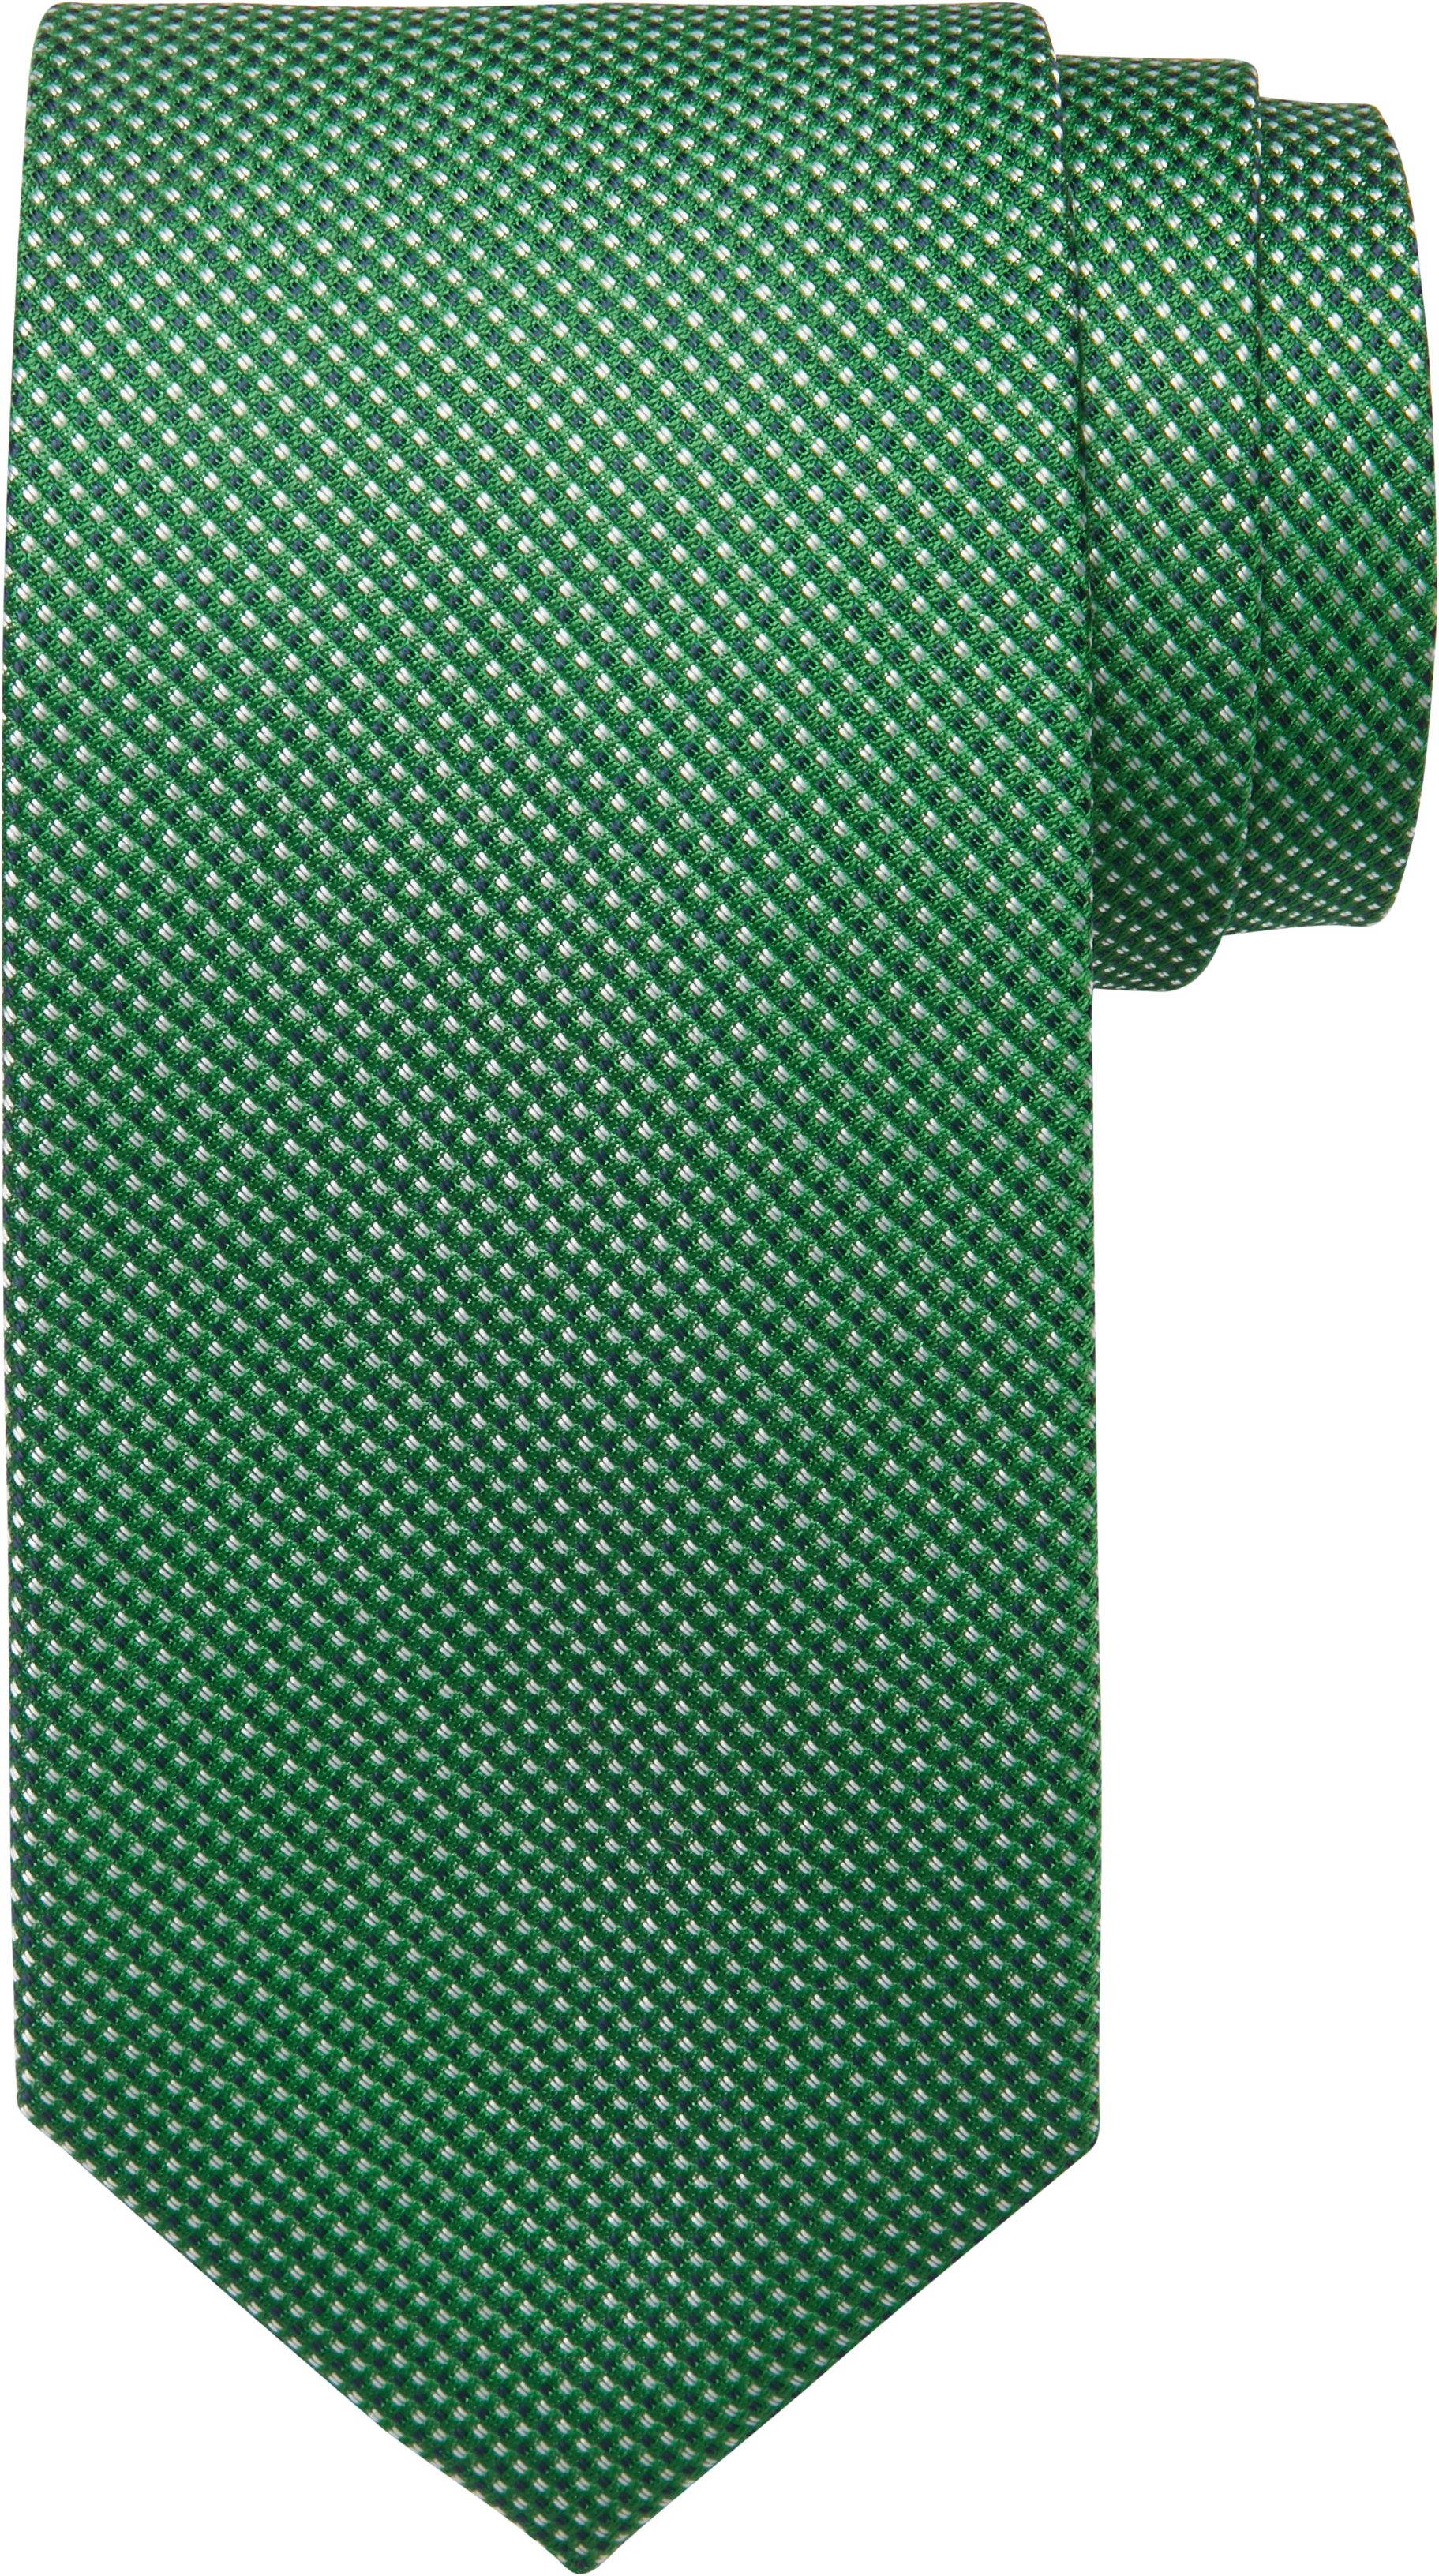 Tommy Hilfiger Green Patterned Narrow Tie - Men's Accessories | Men's ...